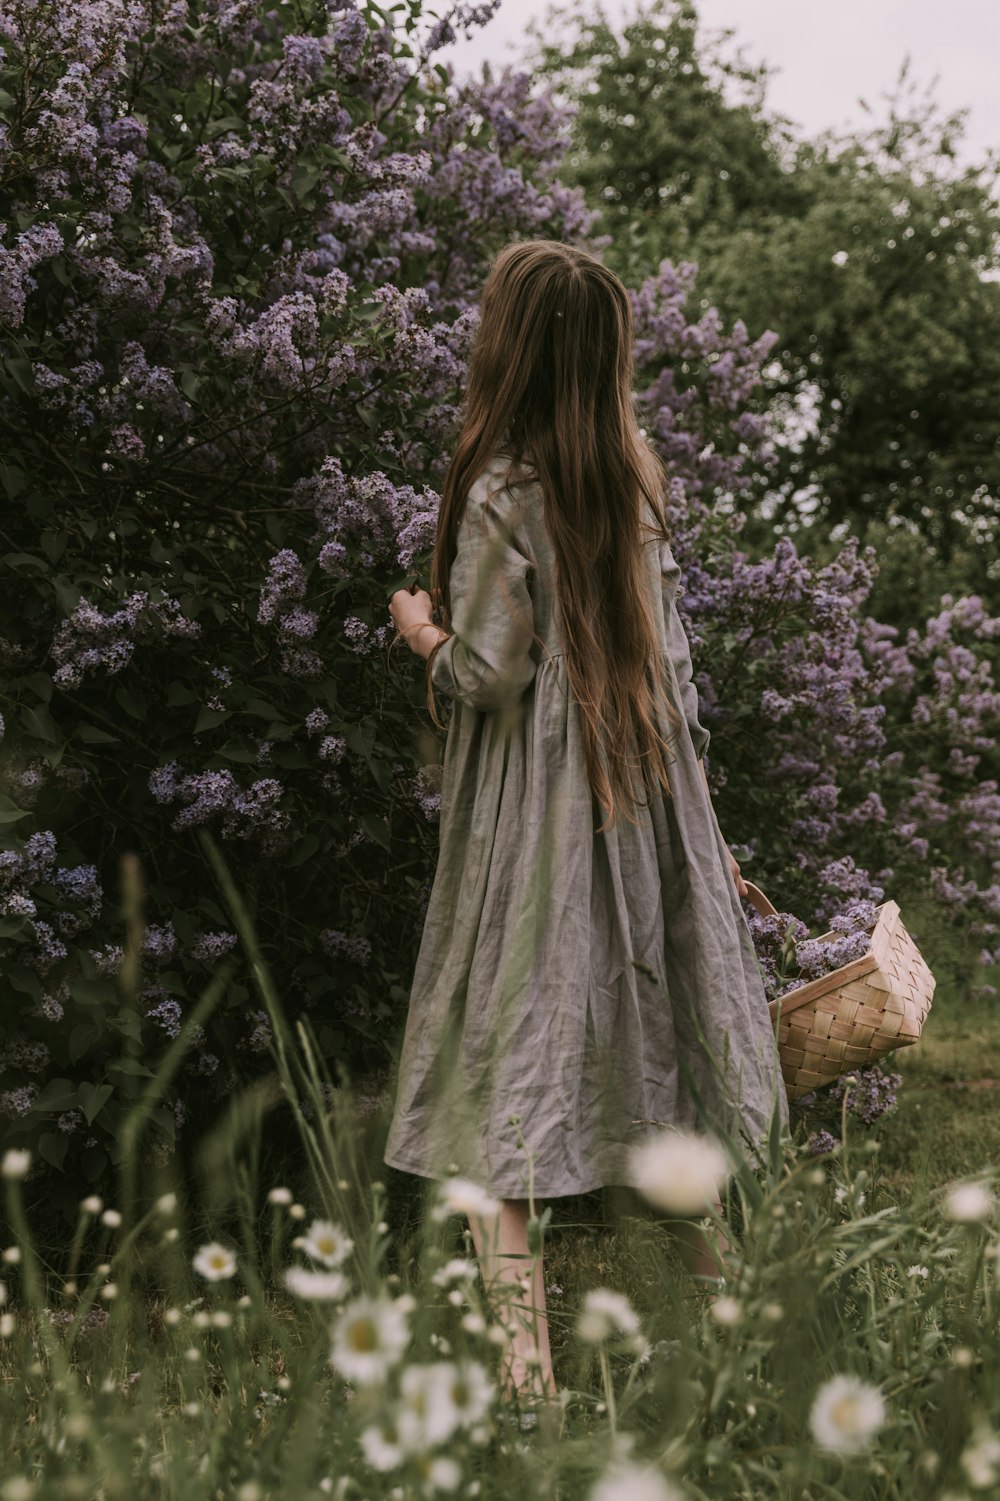 a girl in a dress walking through a field of flowers